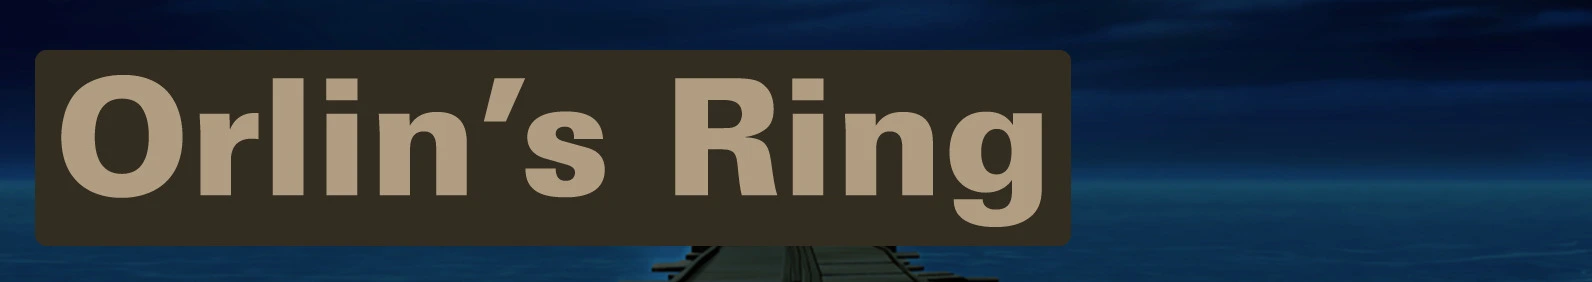 Orlin's Ring main image